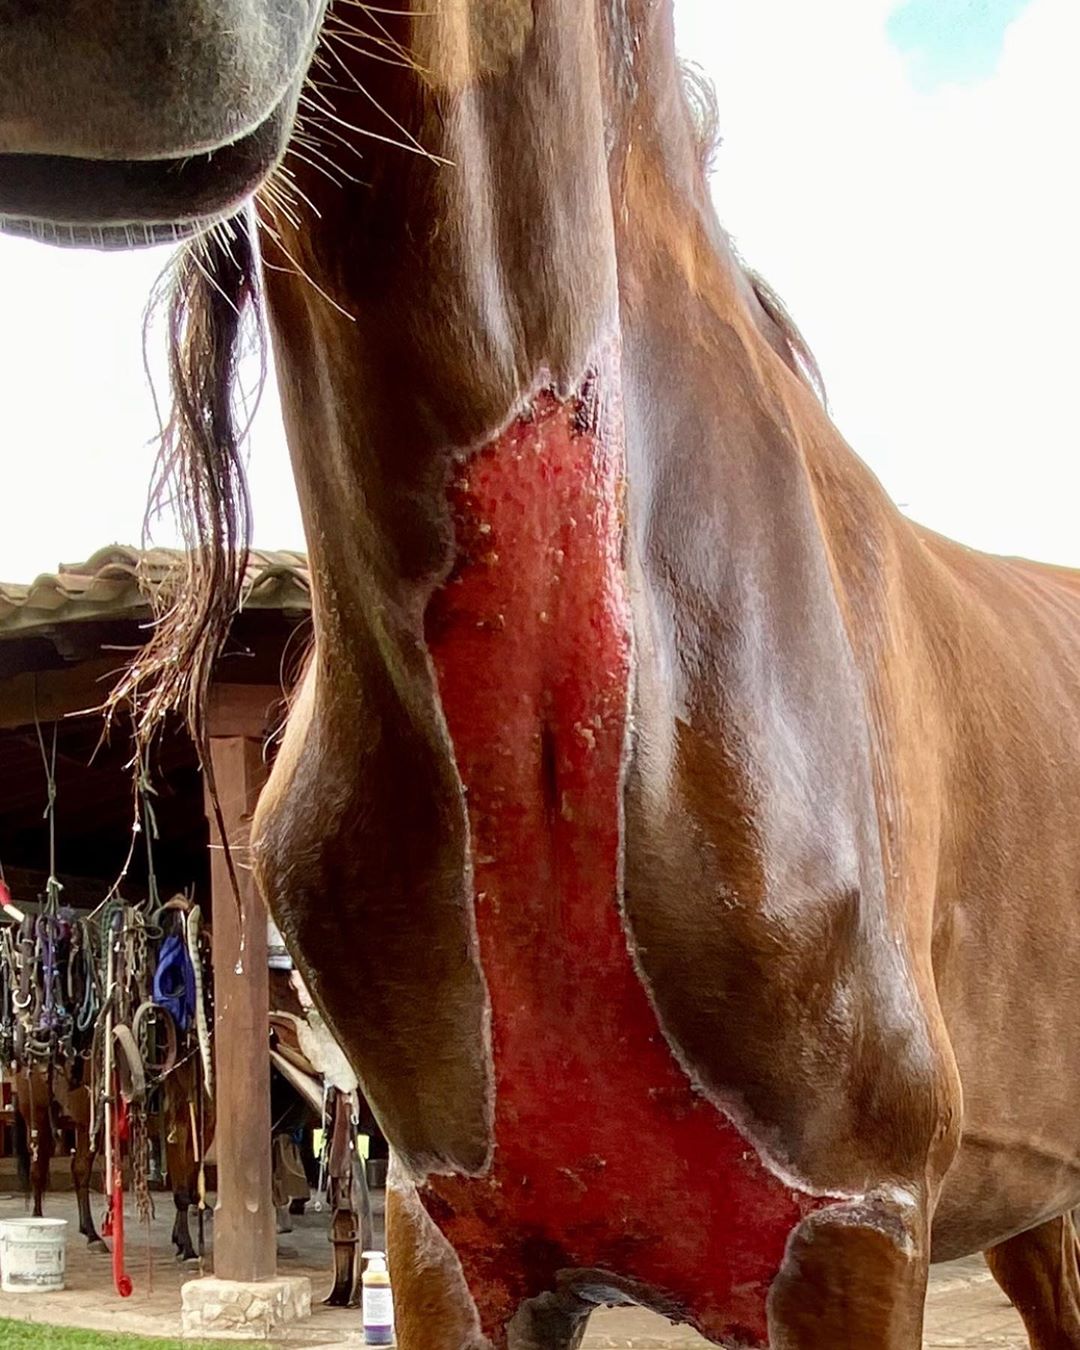 processo de necrose - cavalo recuperado